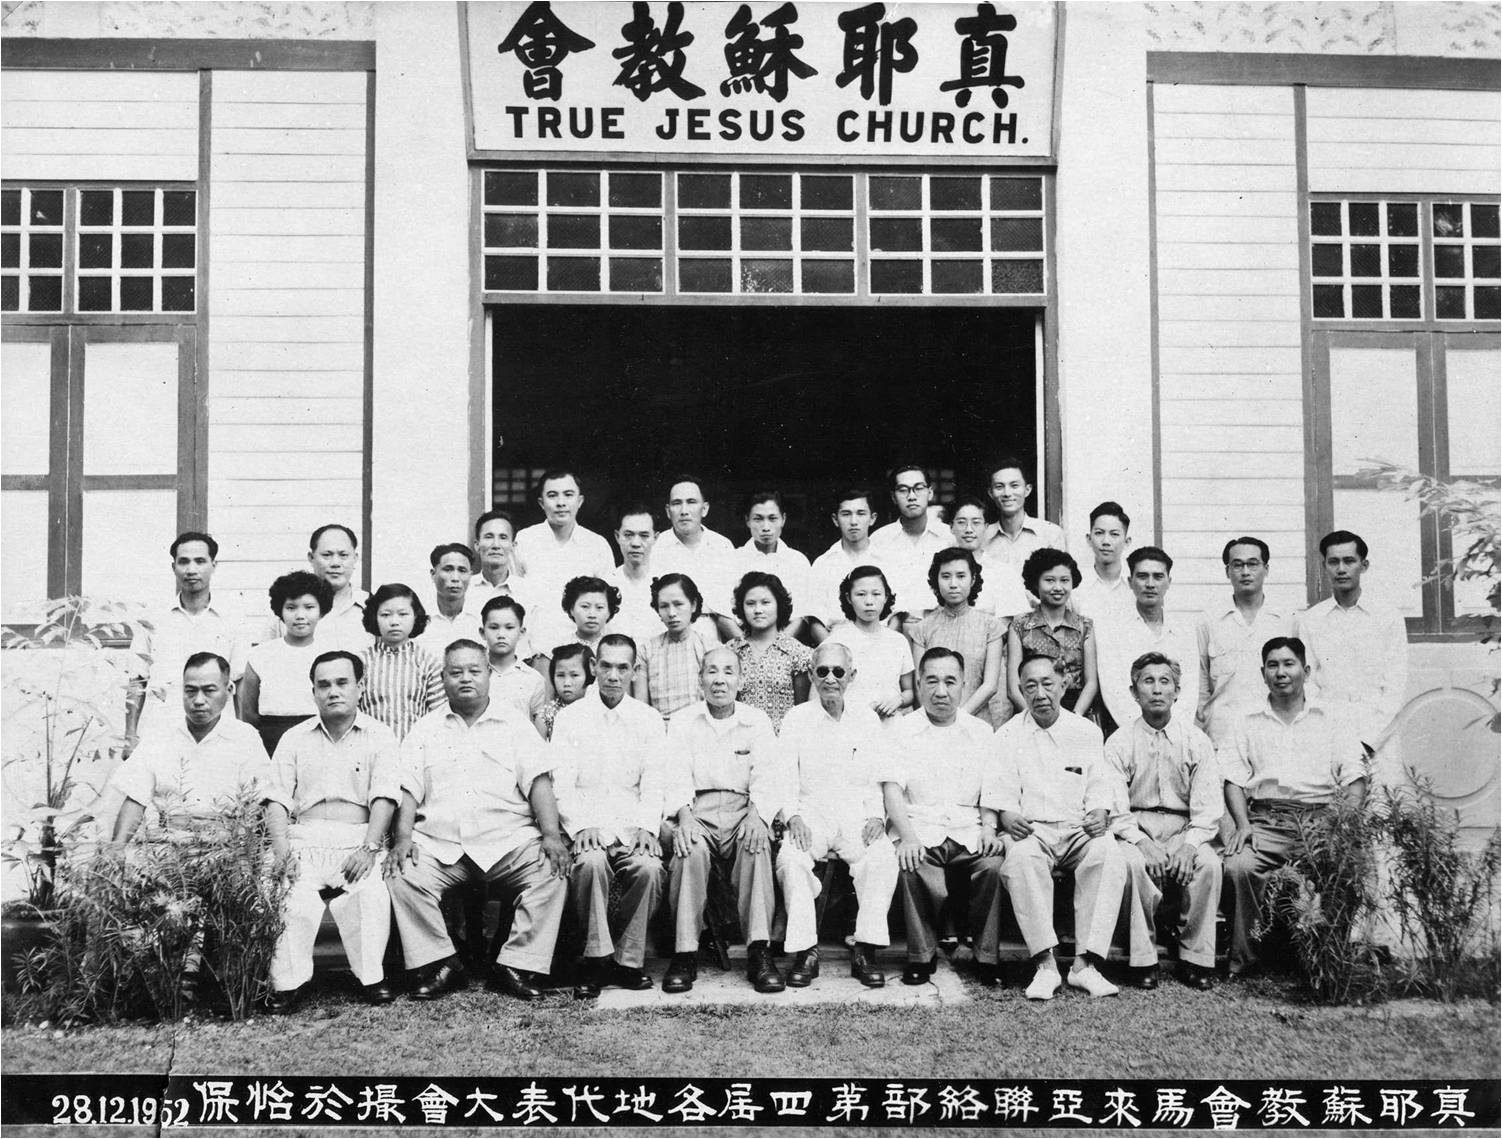 TJC Malaya Coordination Board 4th Annual Meeting in Ipoh 真耶稣教会马来亚各地代表大会于怡保 28/12/1952